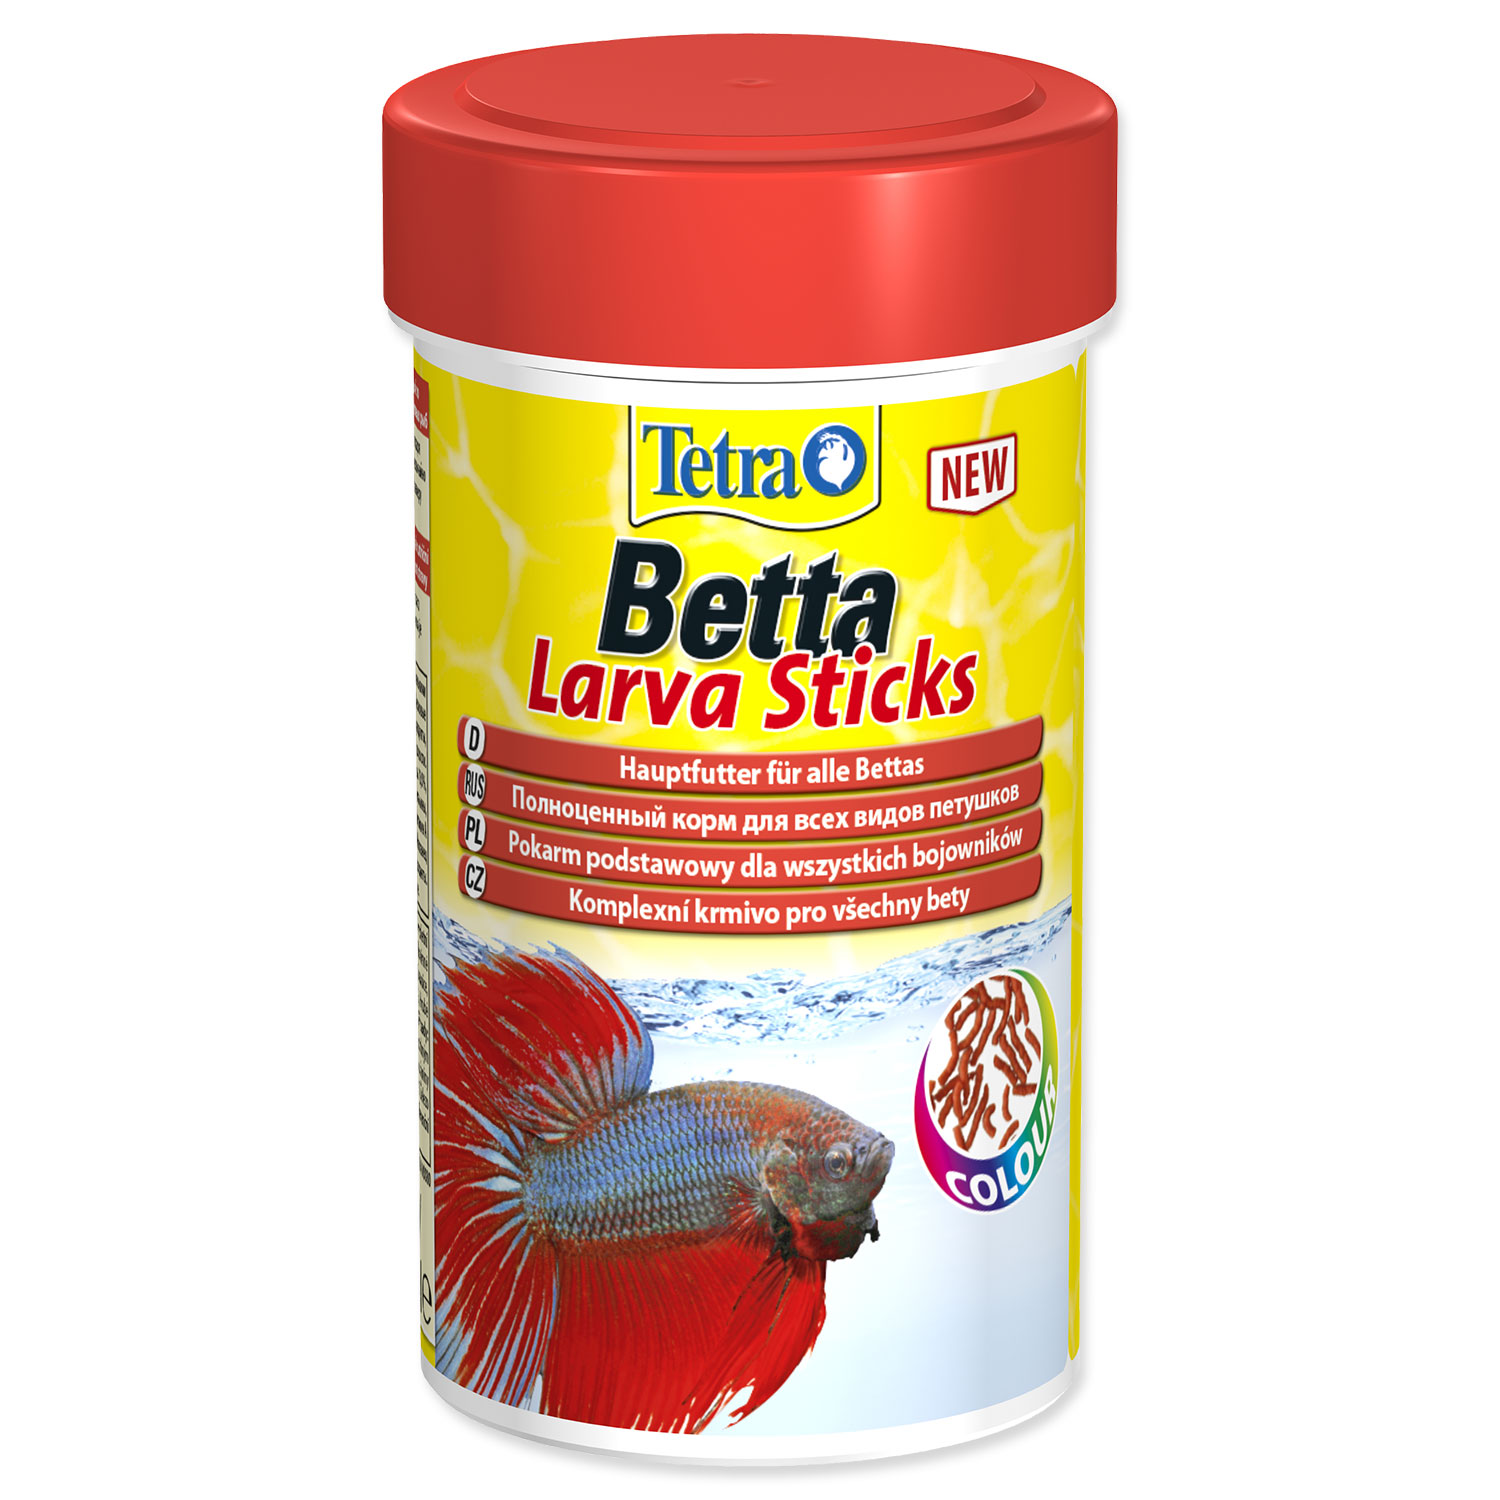 TETRA Betta Larva Sticks